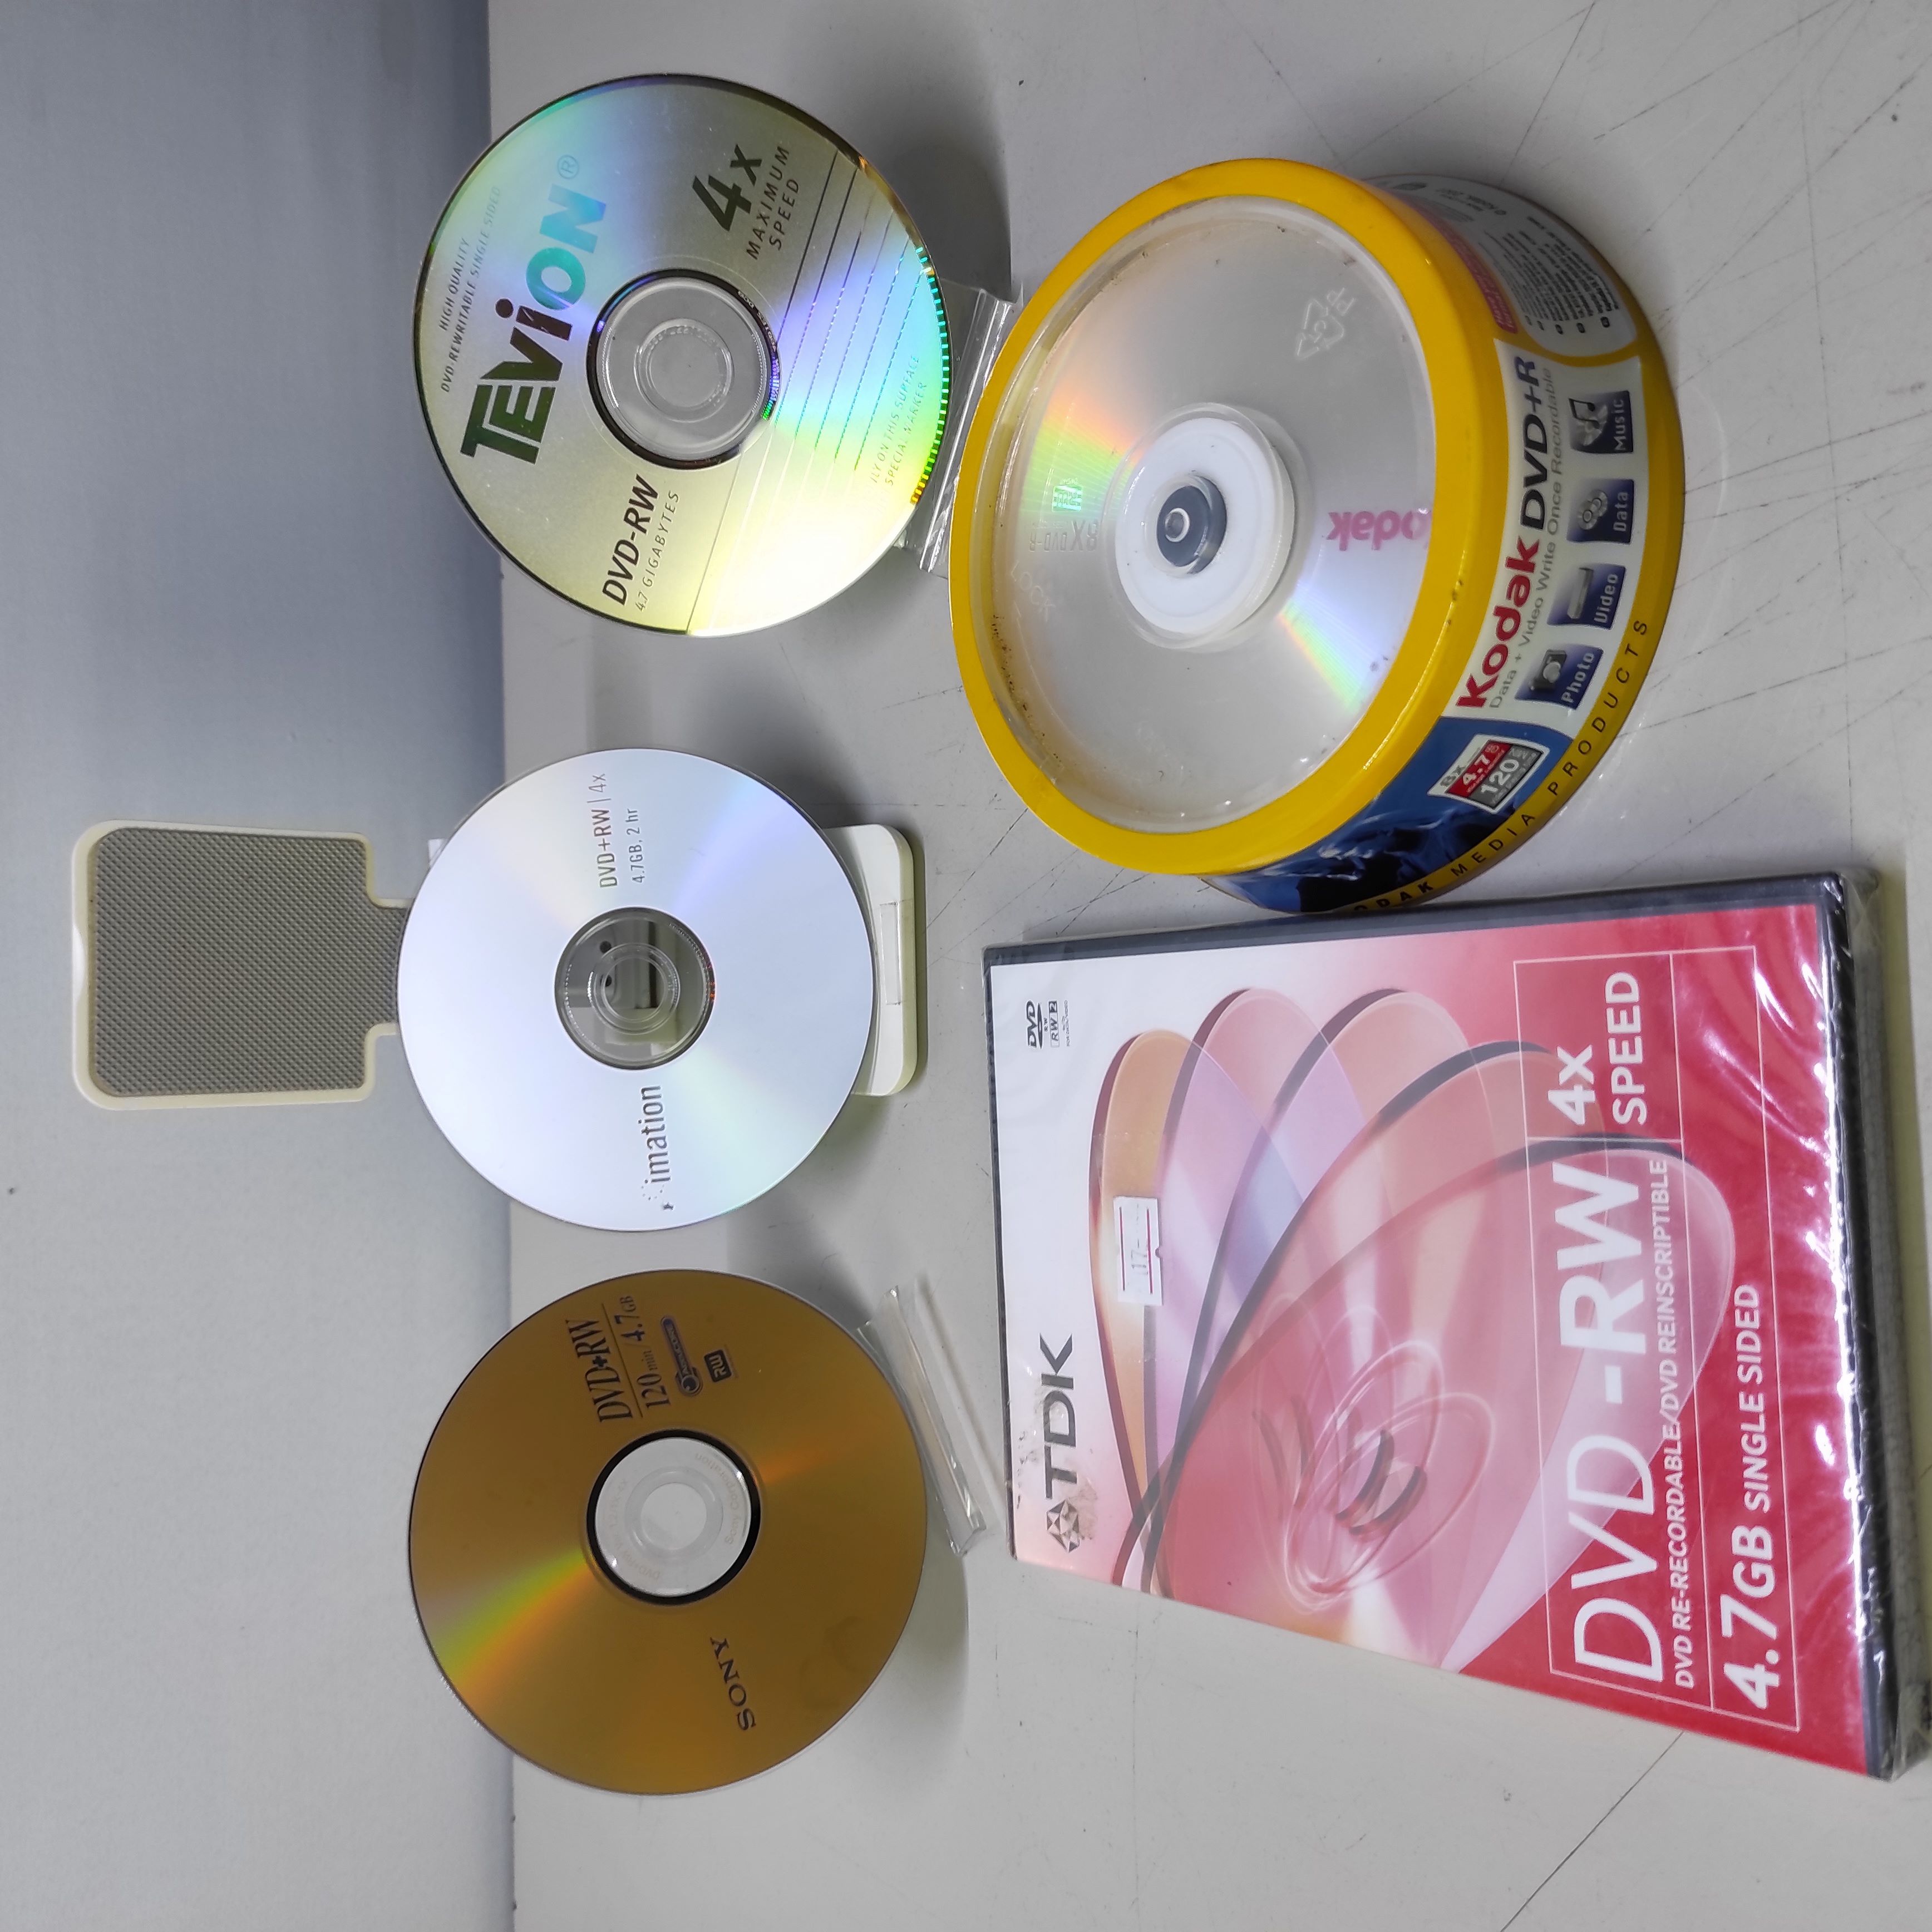 SONY DVD-RW TDK DVD-R cenforpro.com